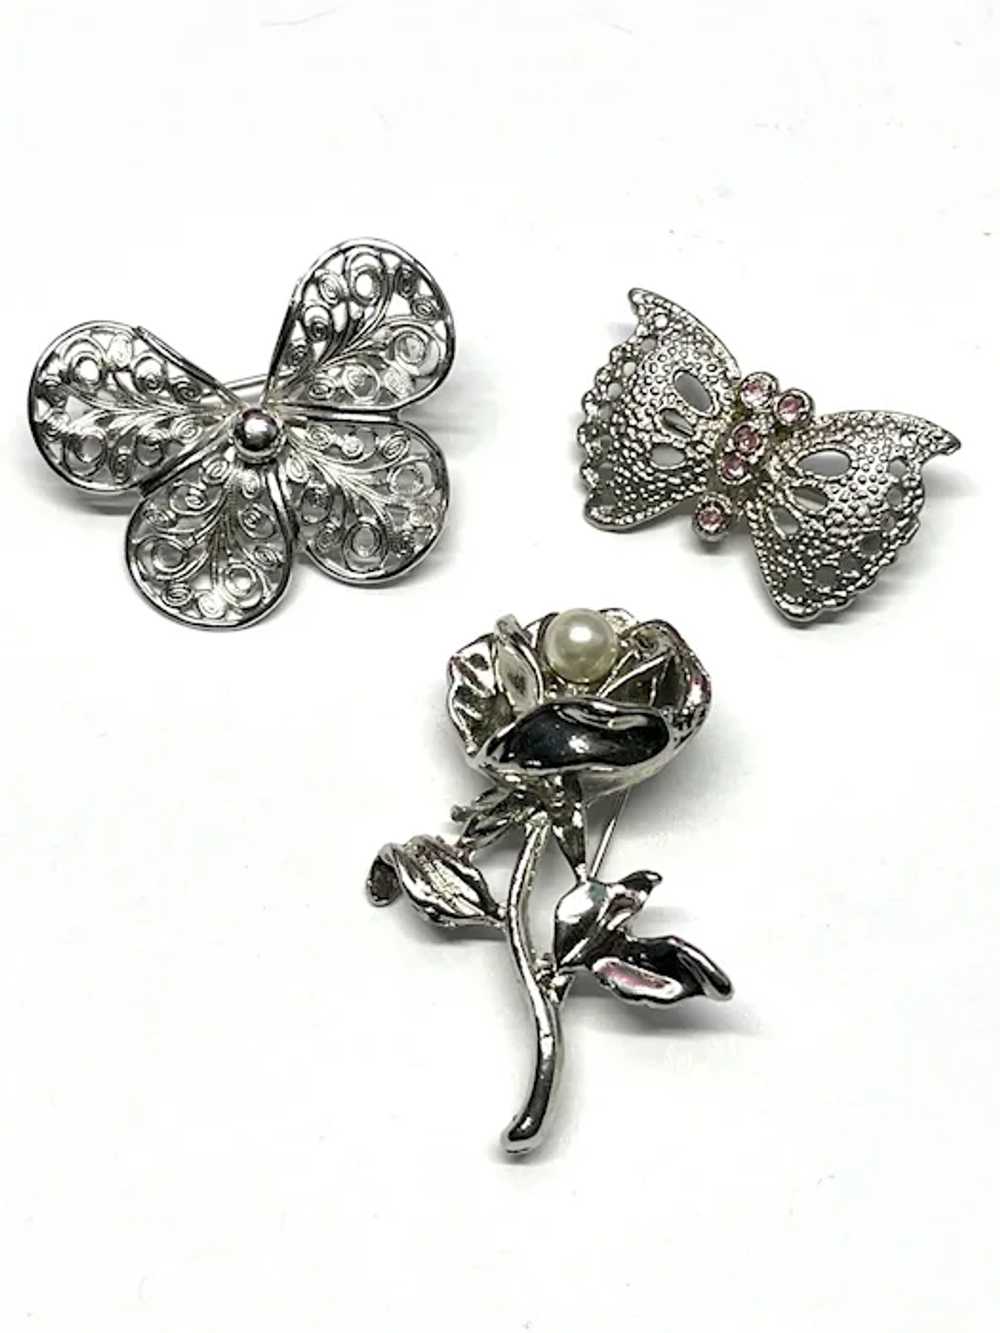 Three Vintage Silver Brooch Pins - image 2